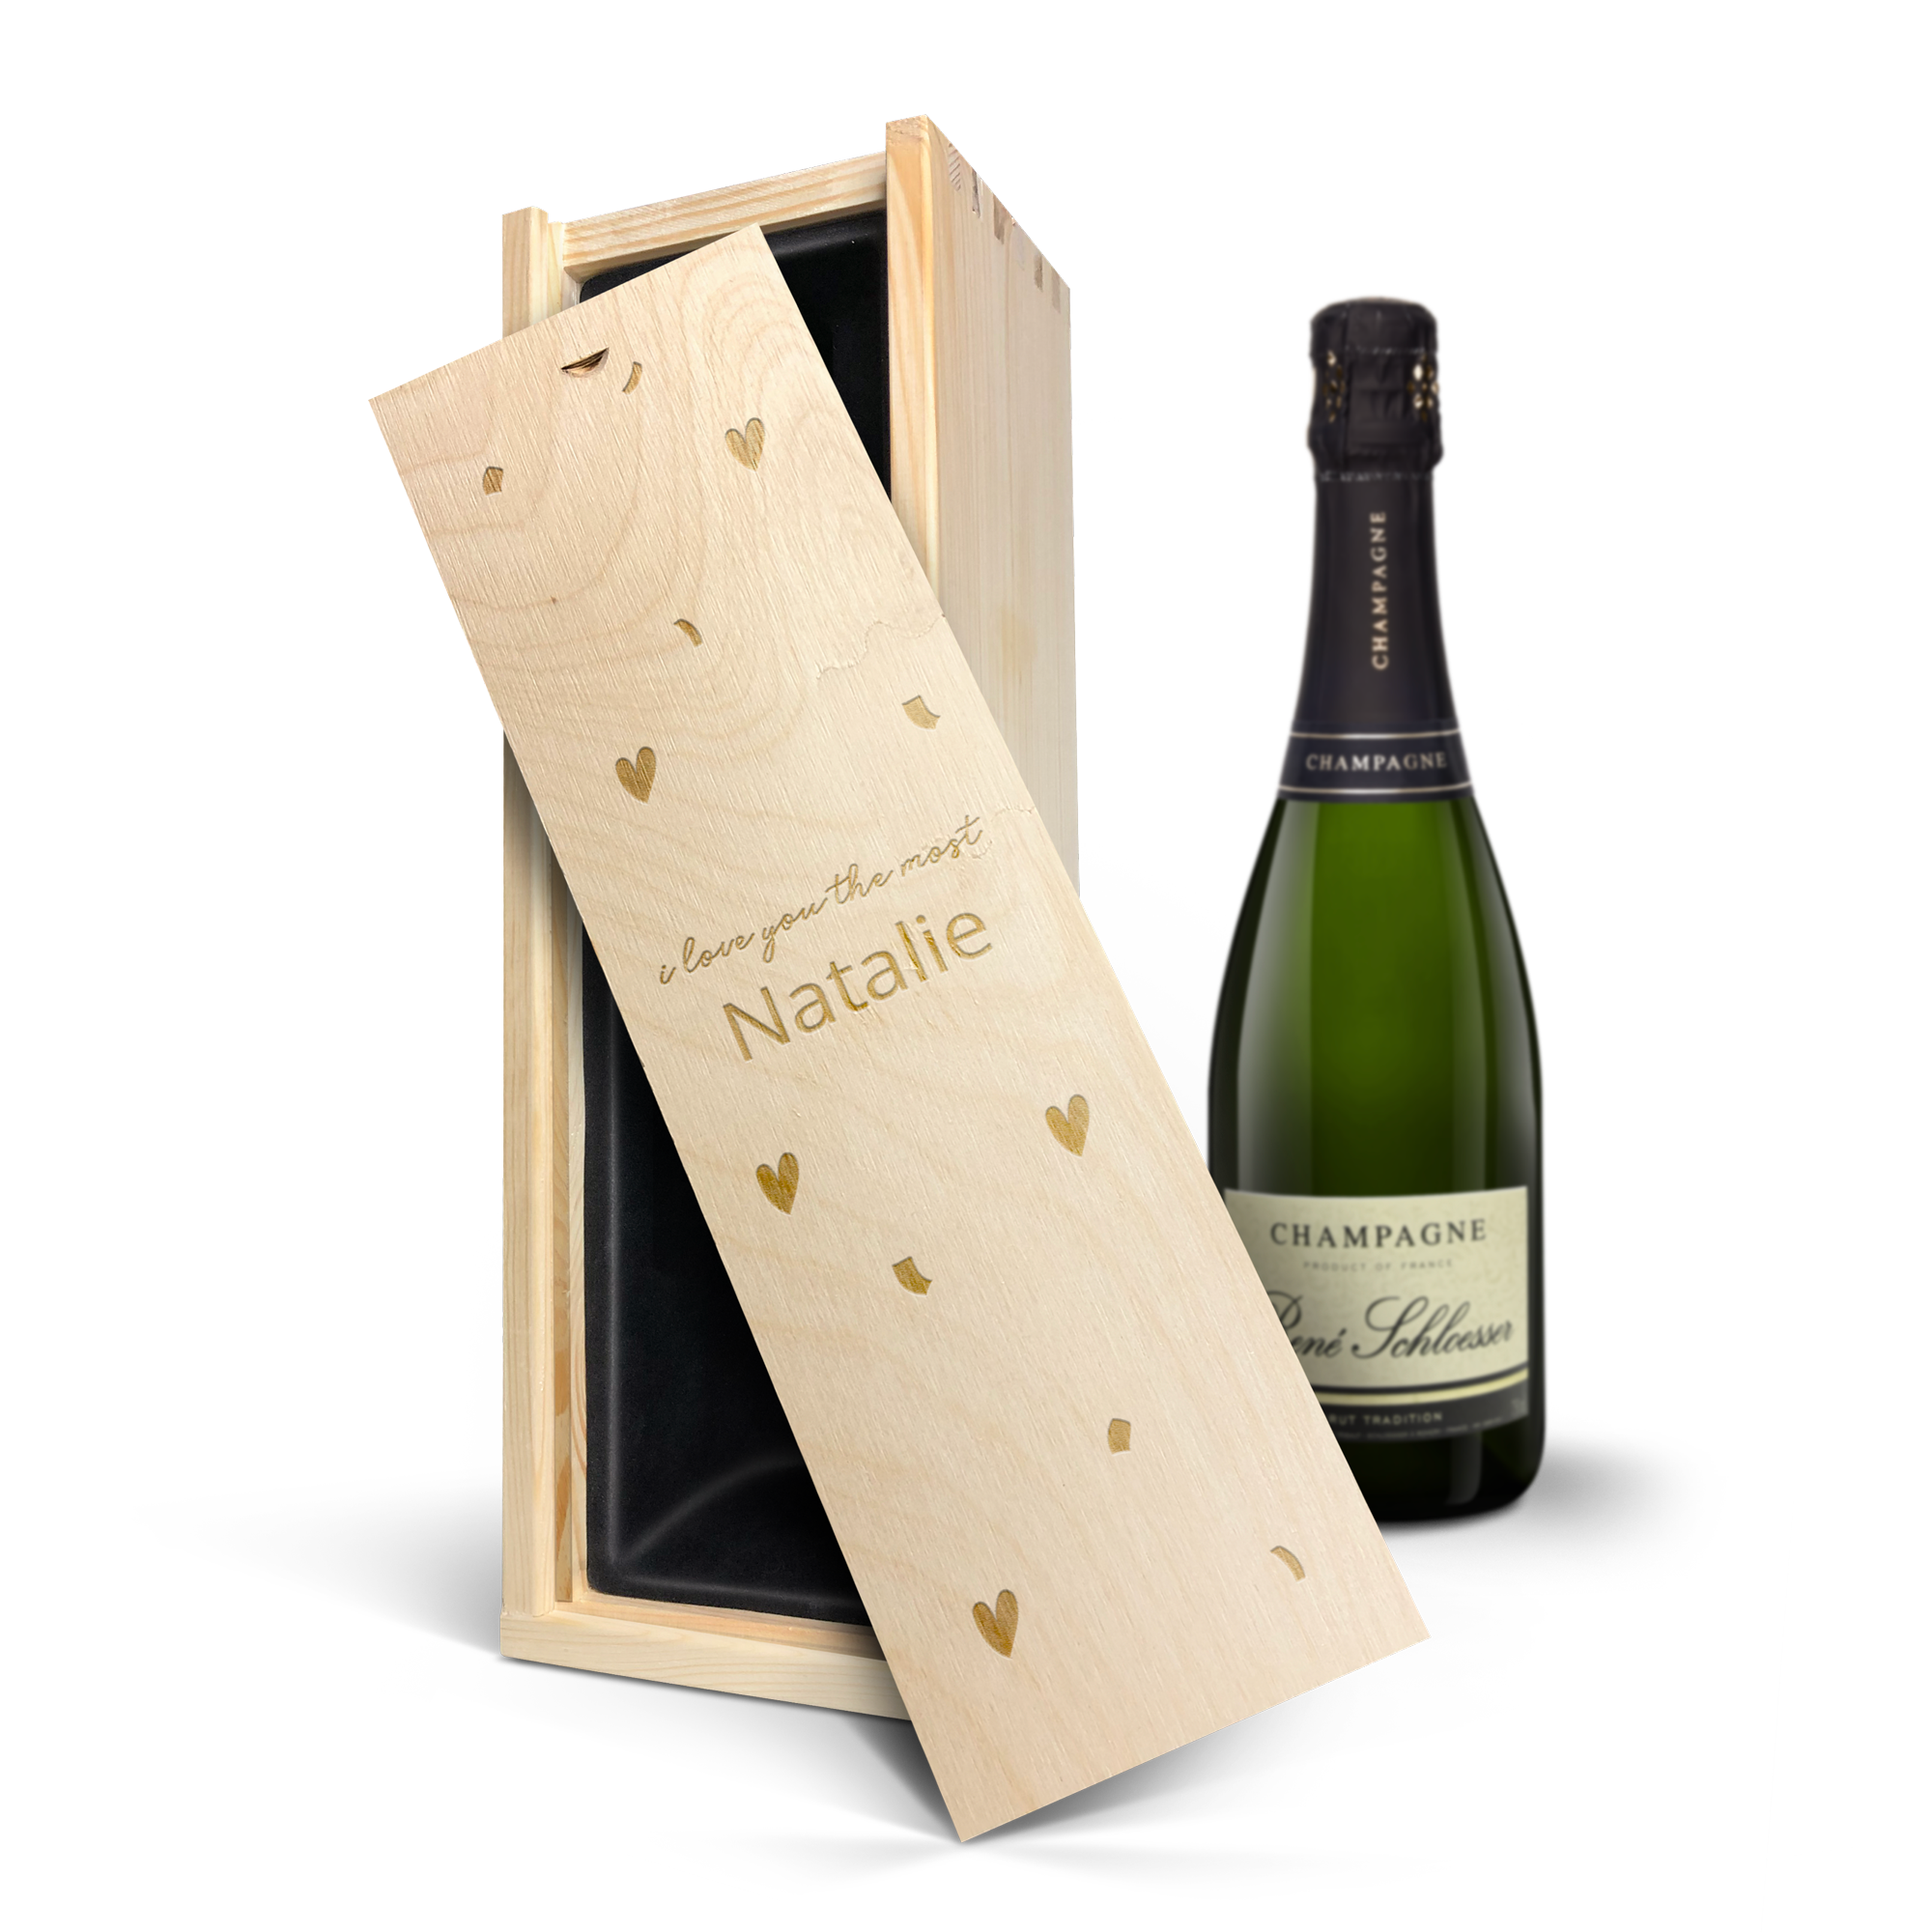 Personalised Champagne - René Schloesser (750ml)